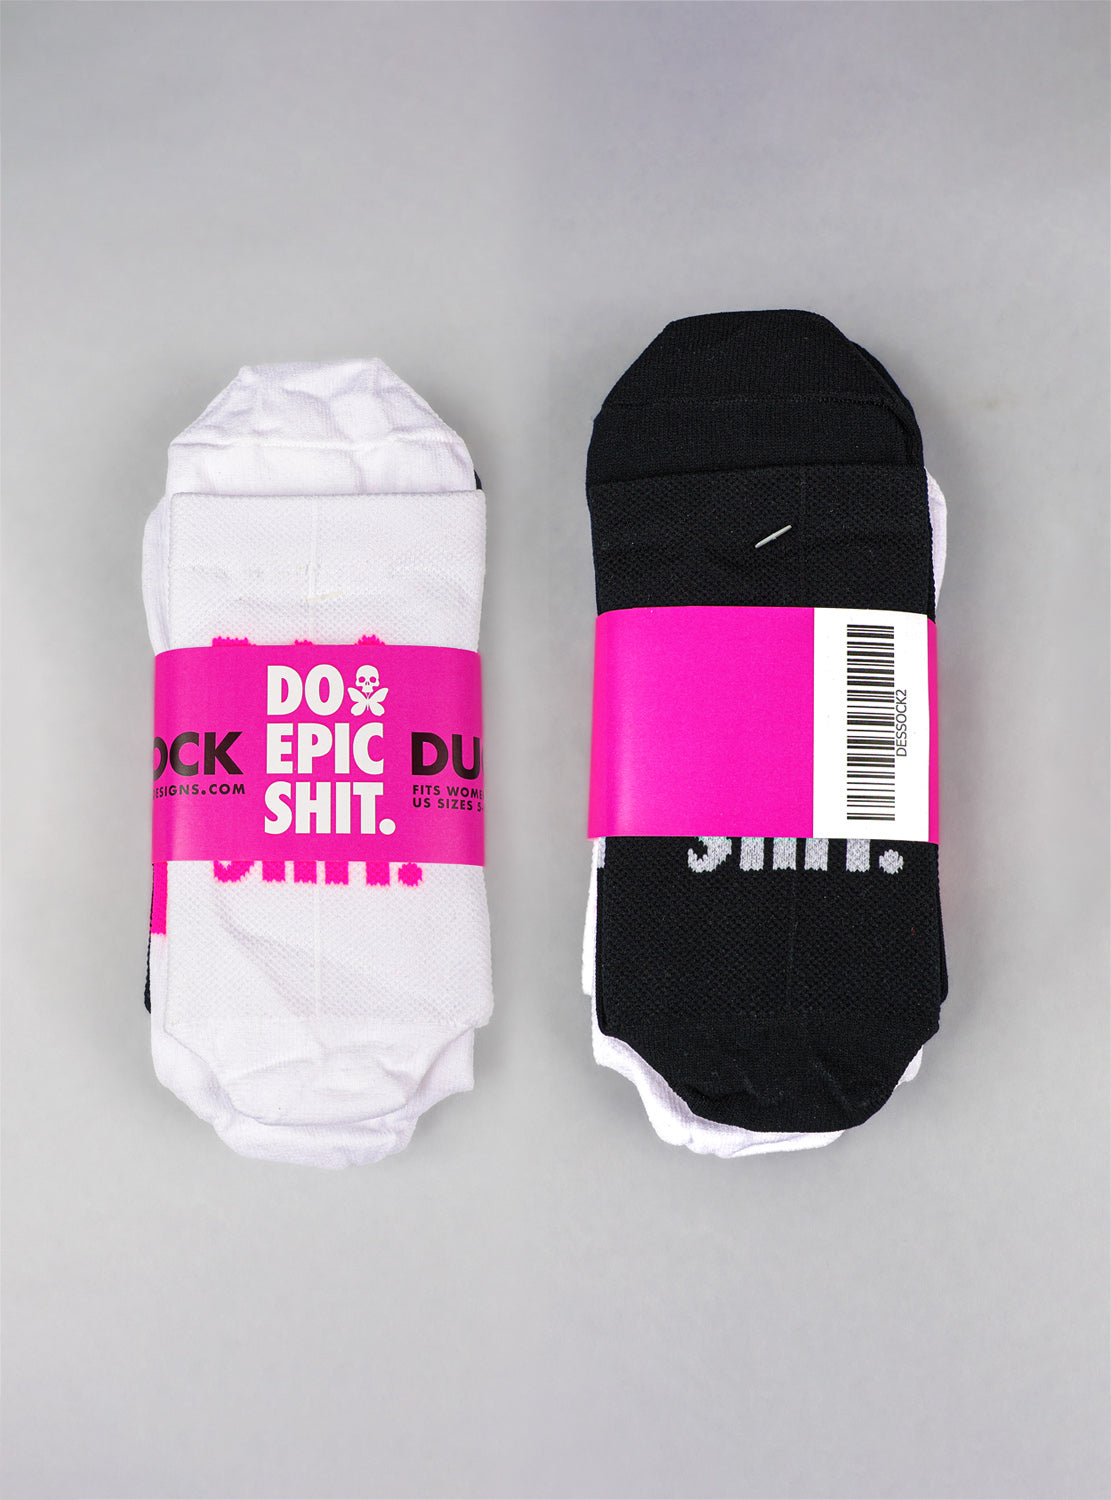 betty designs do epic shit socks